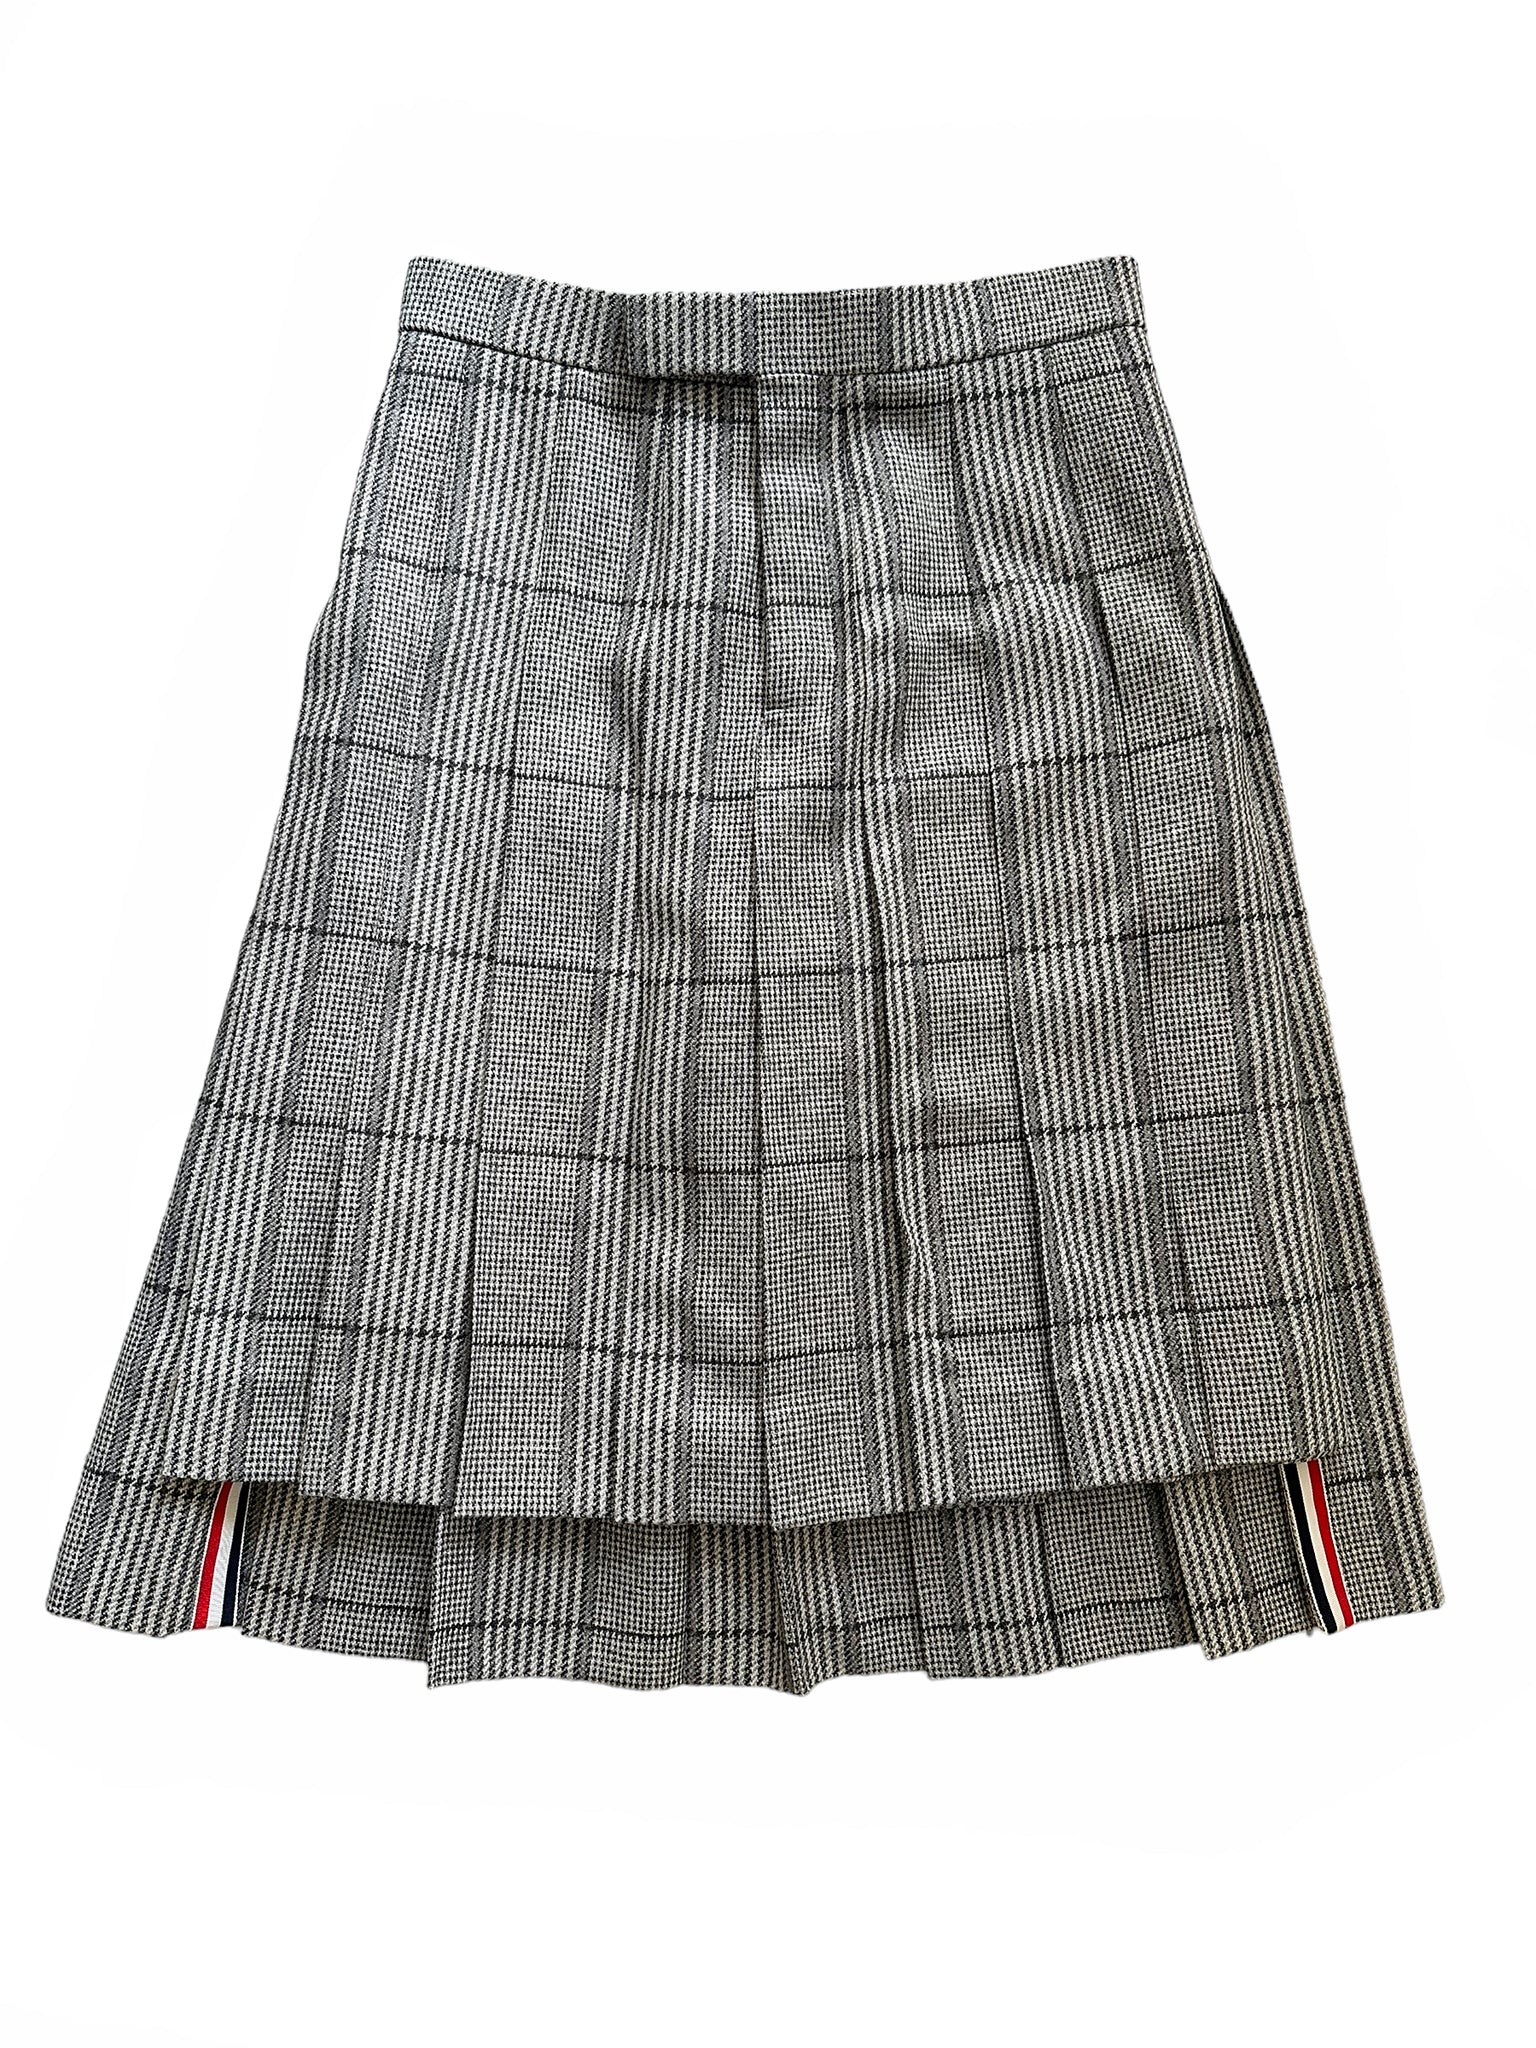 Thom Browne Plaid Wool Men’s Skirt/Kilt